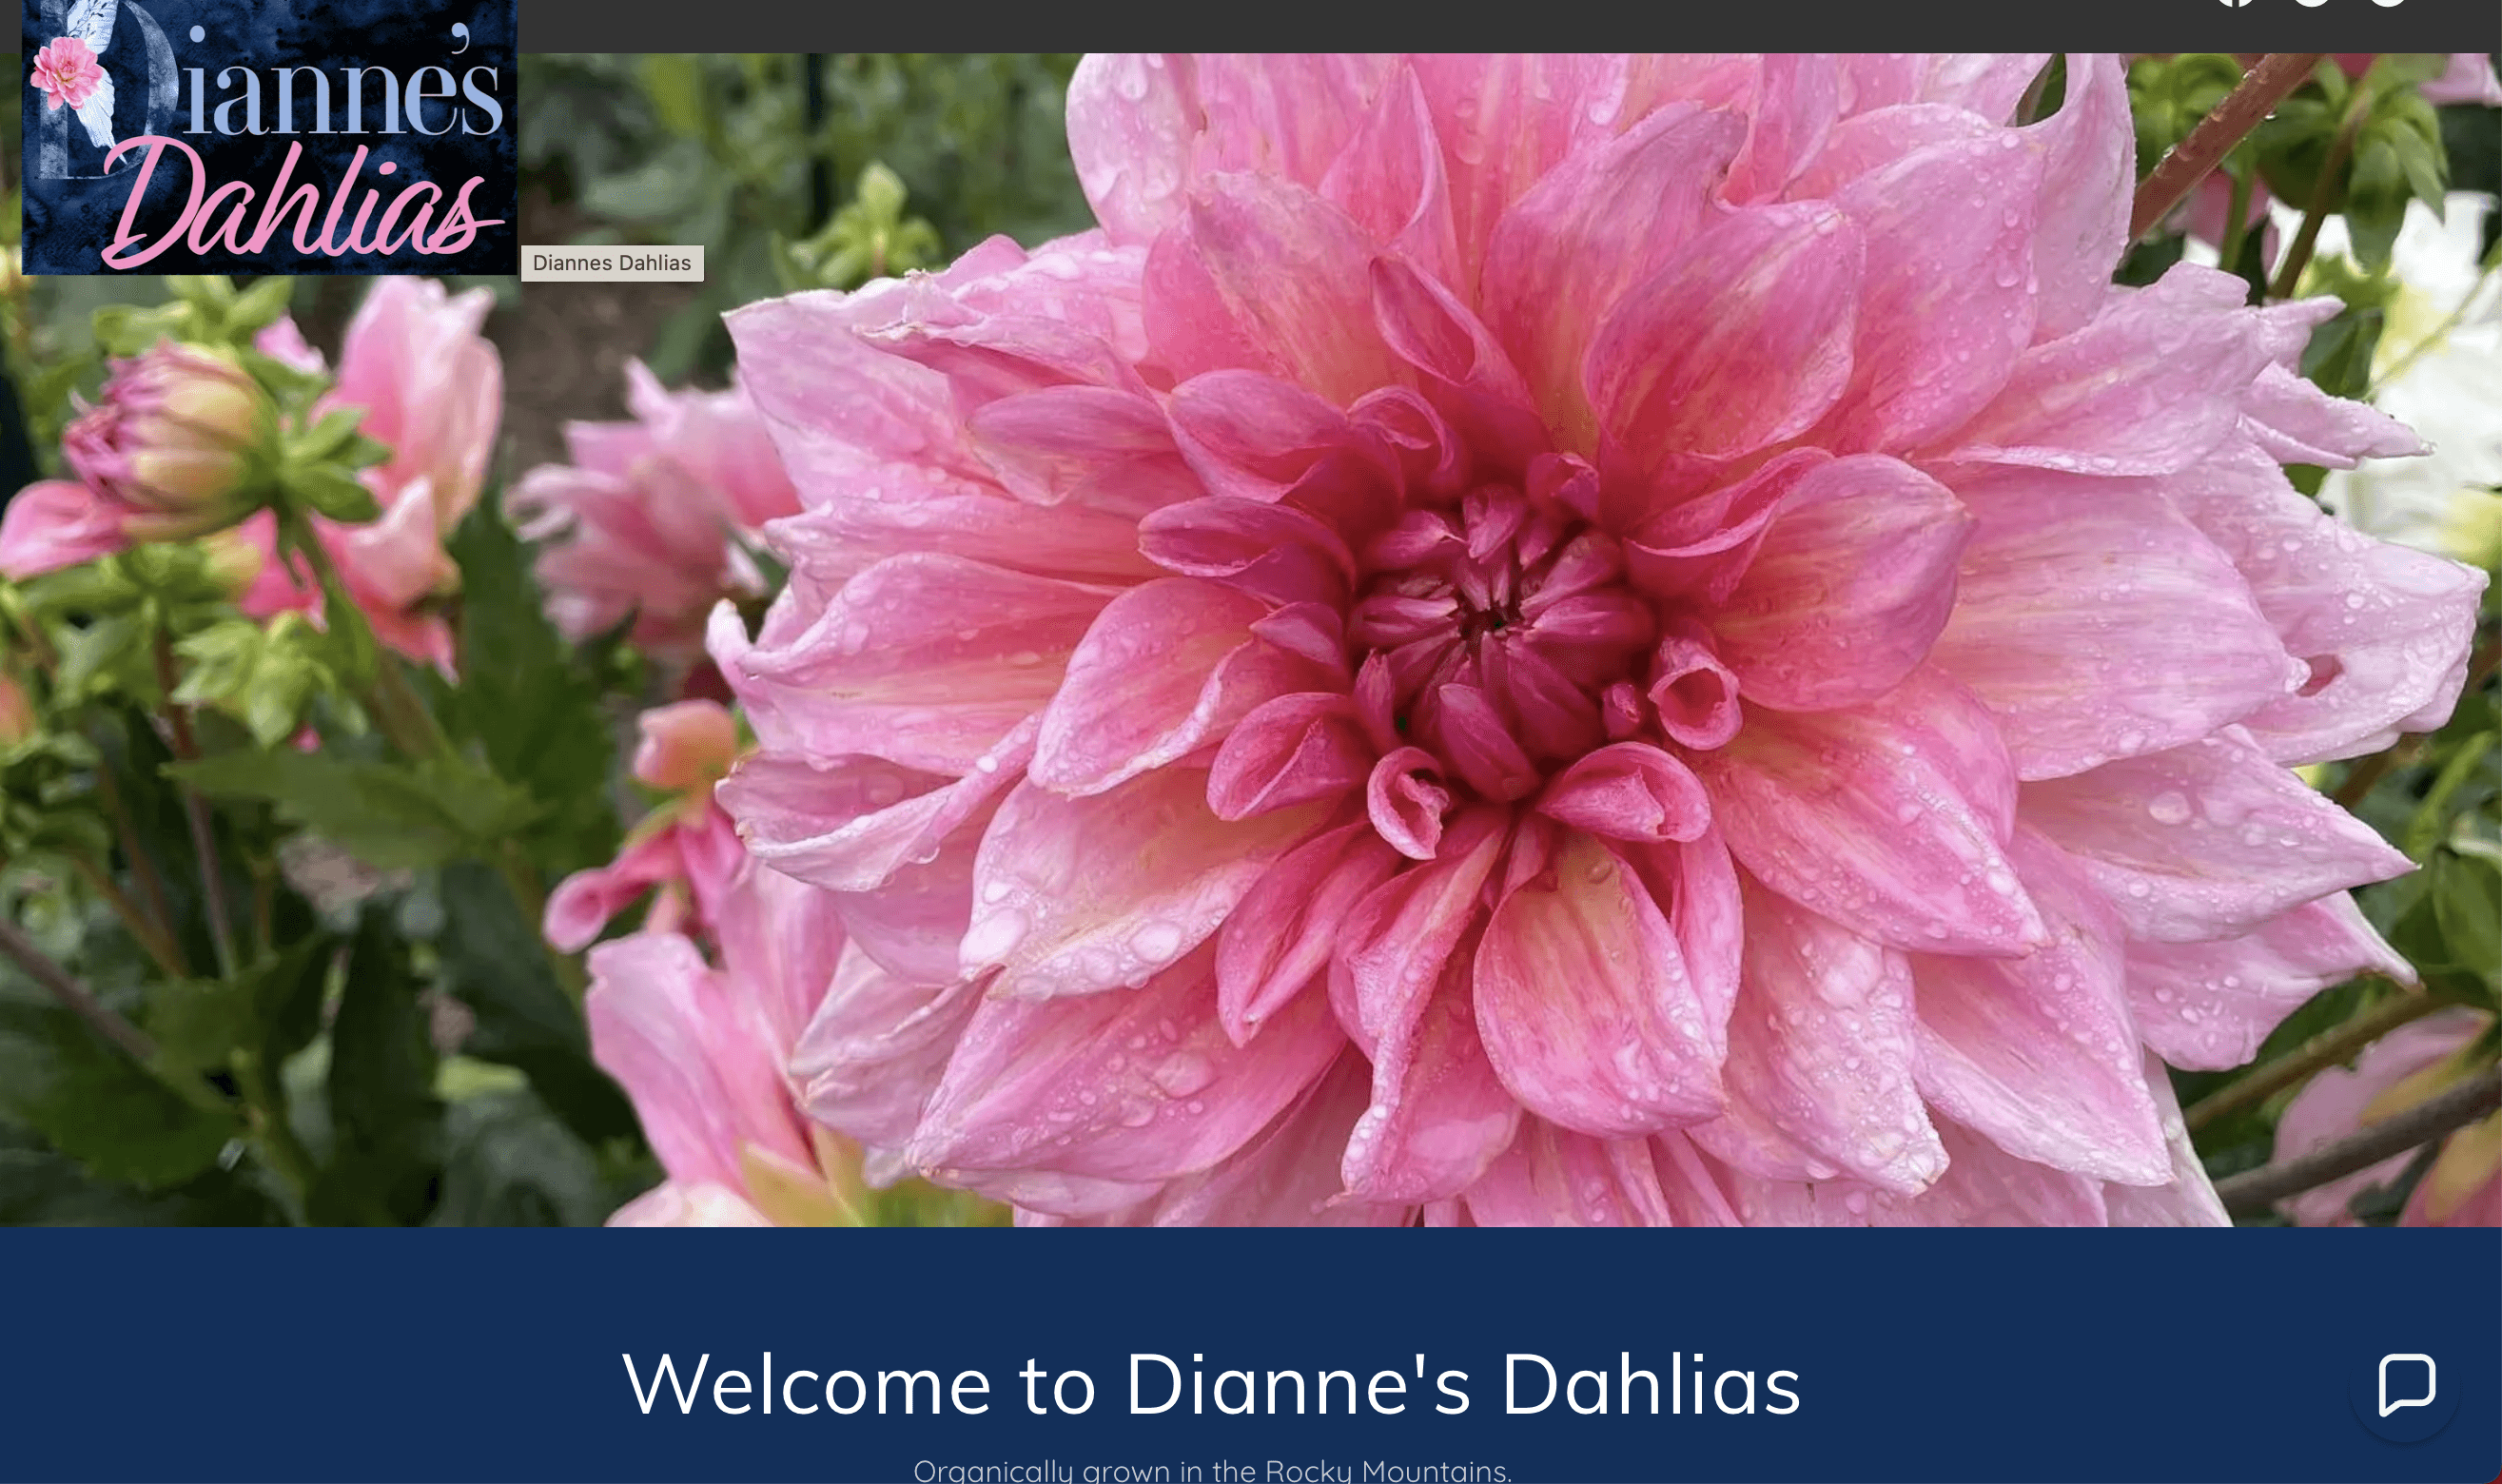 Dianne's Dahlia's Website